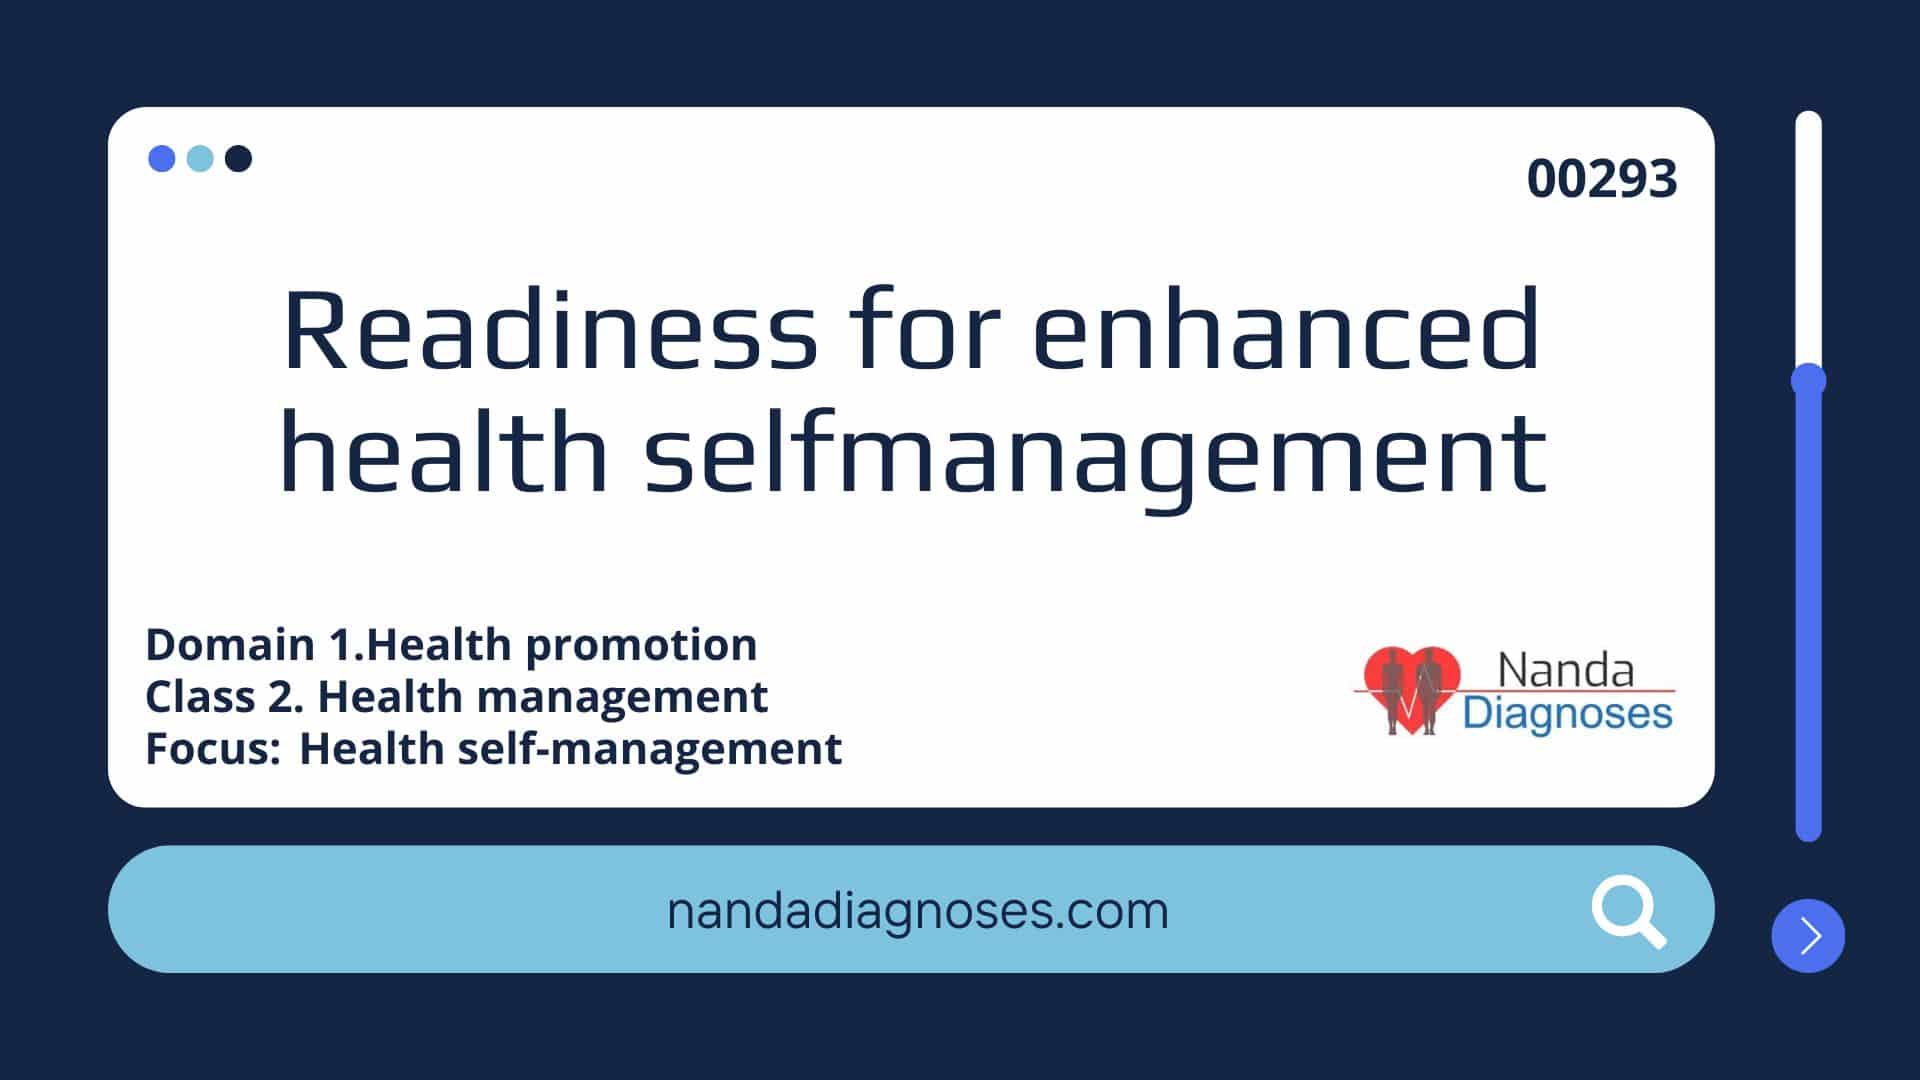 Nursing diagnosis Readiness for enhanced health selfmanagement